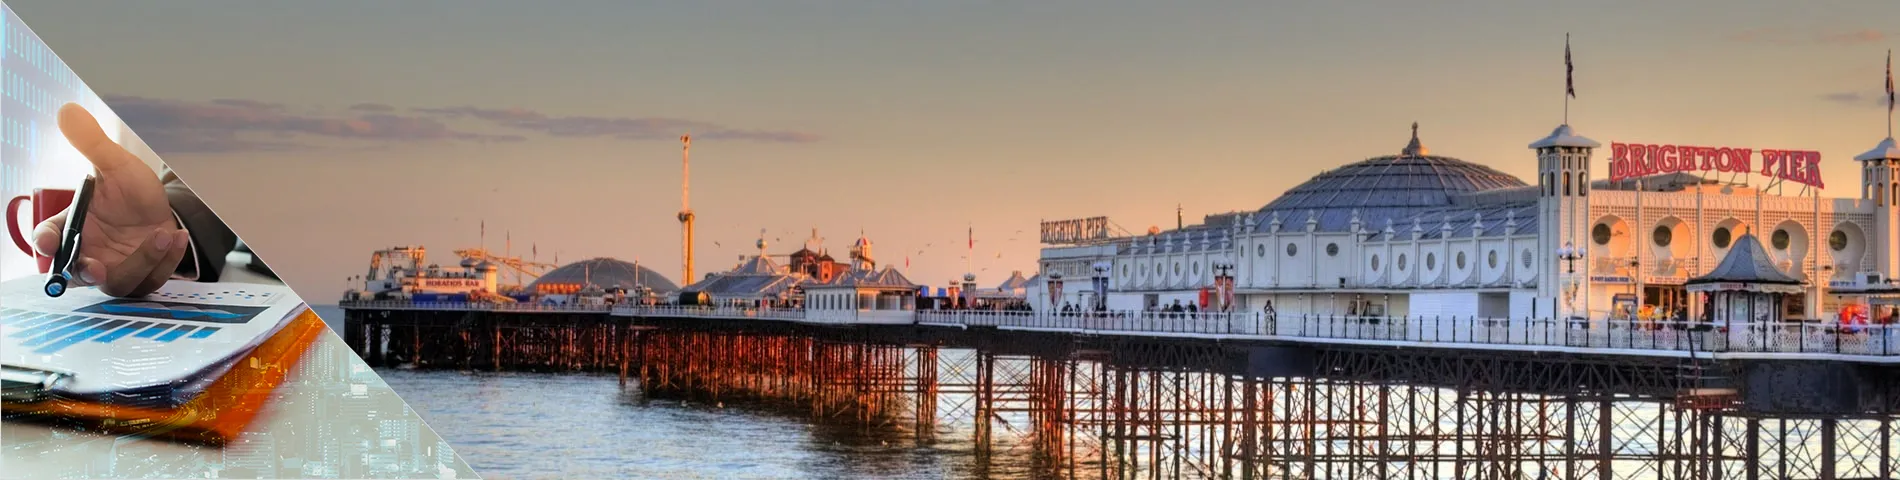 Brighton - Bankacılık ve Finans